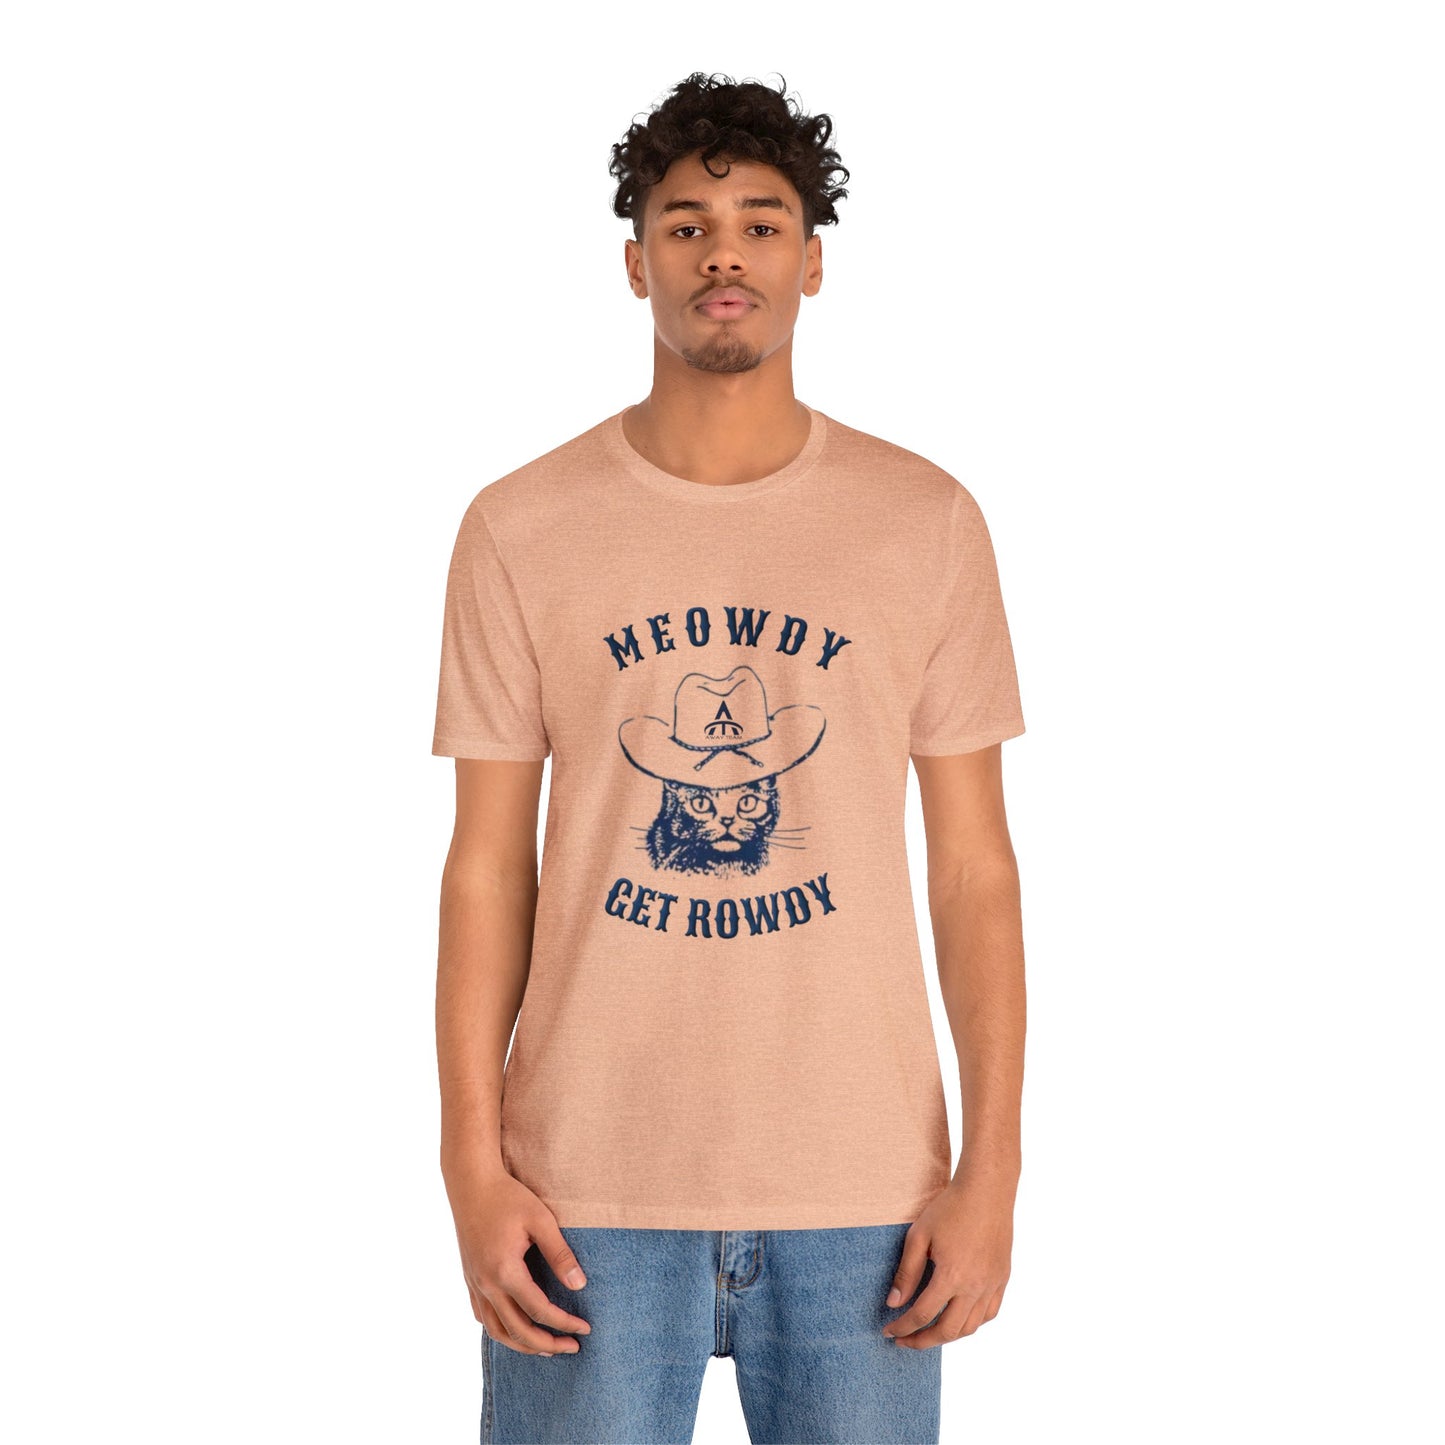 MEOWDY - GET ROWDY Away Team Doc's Shirt